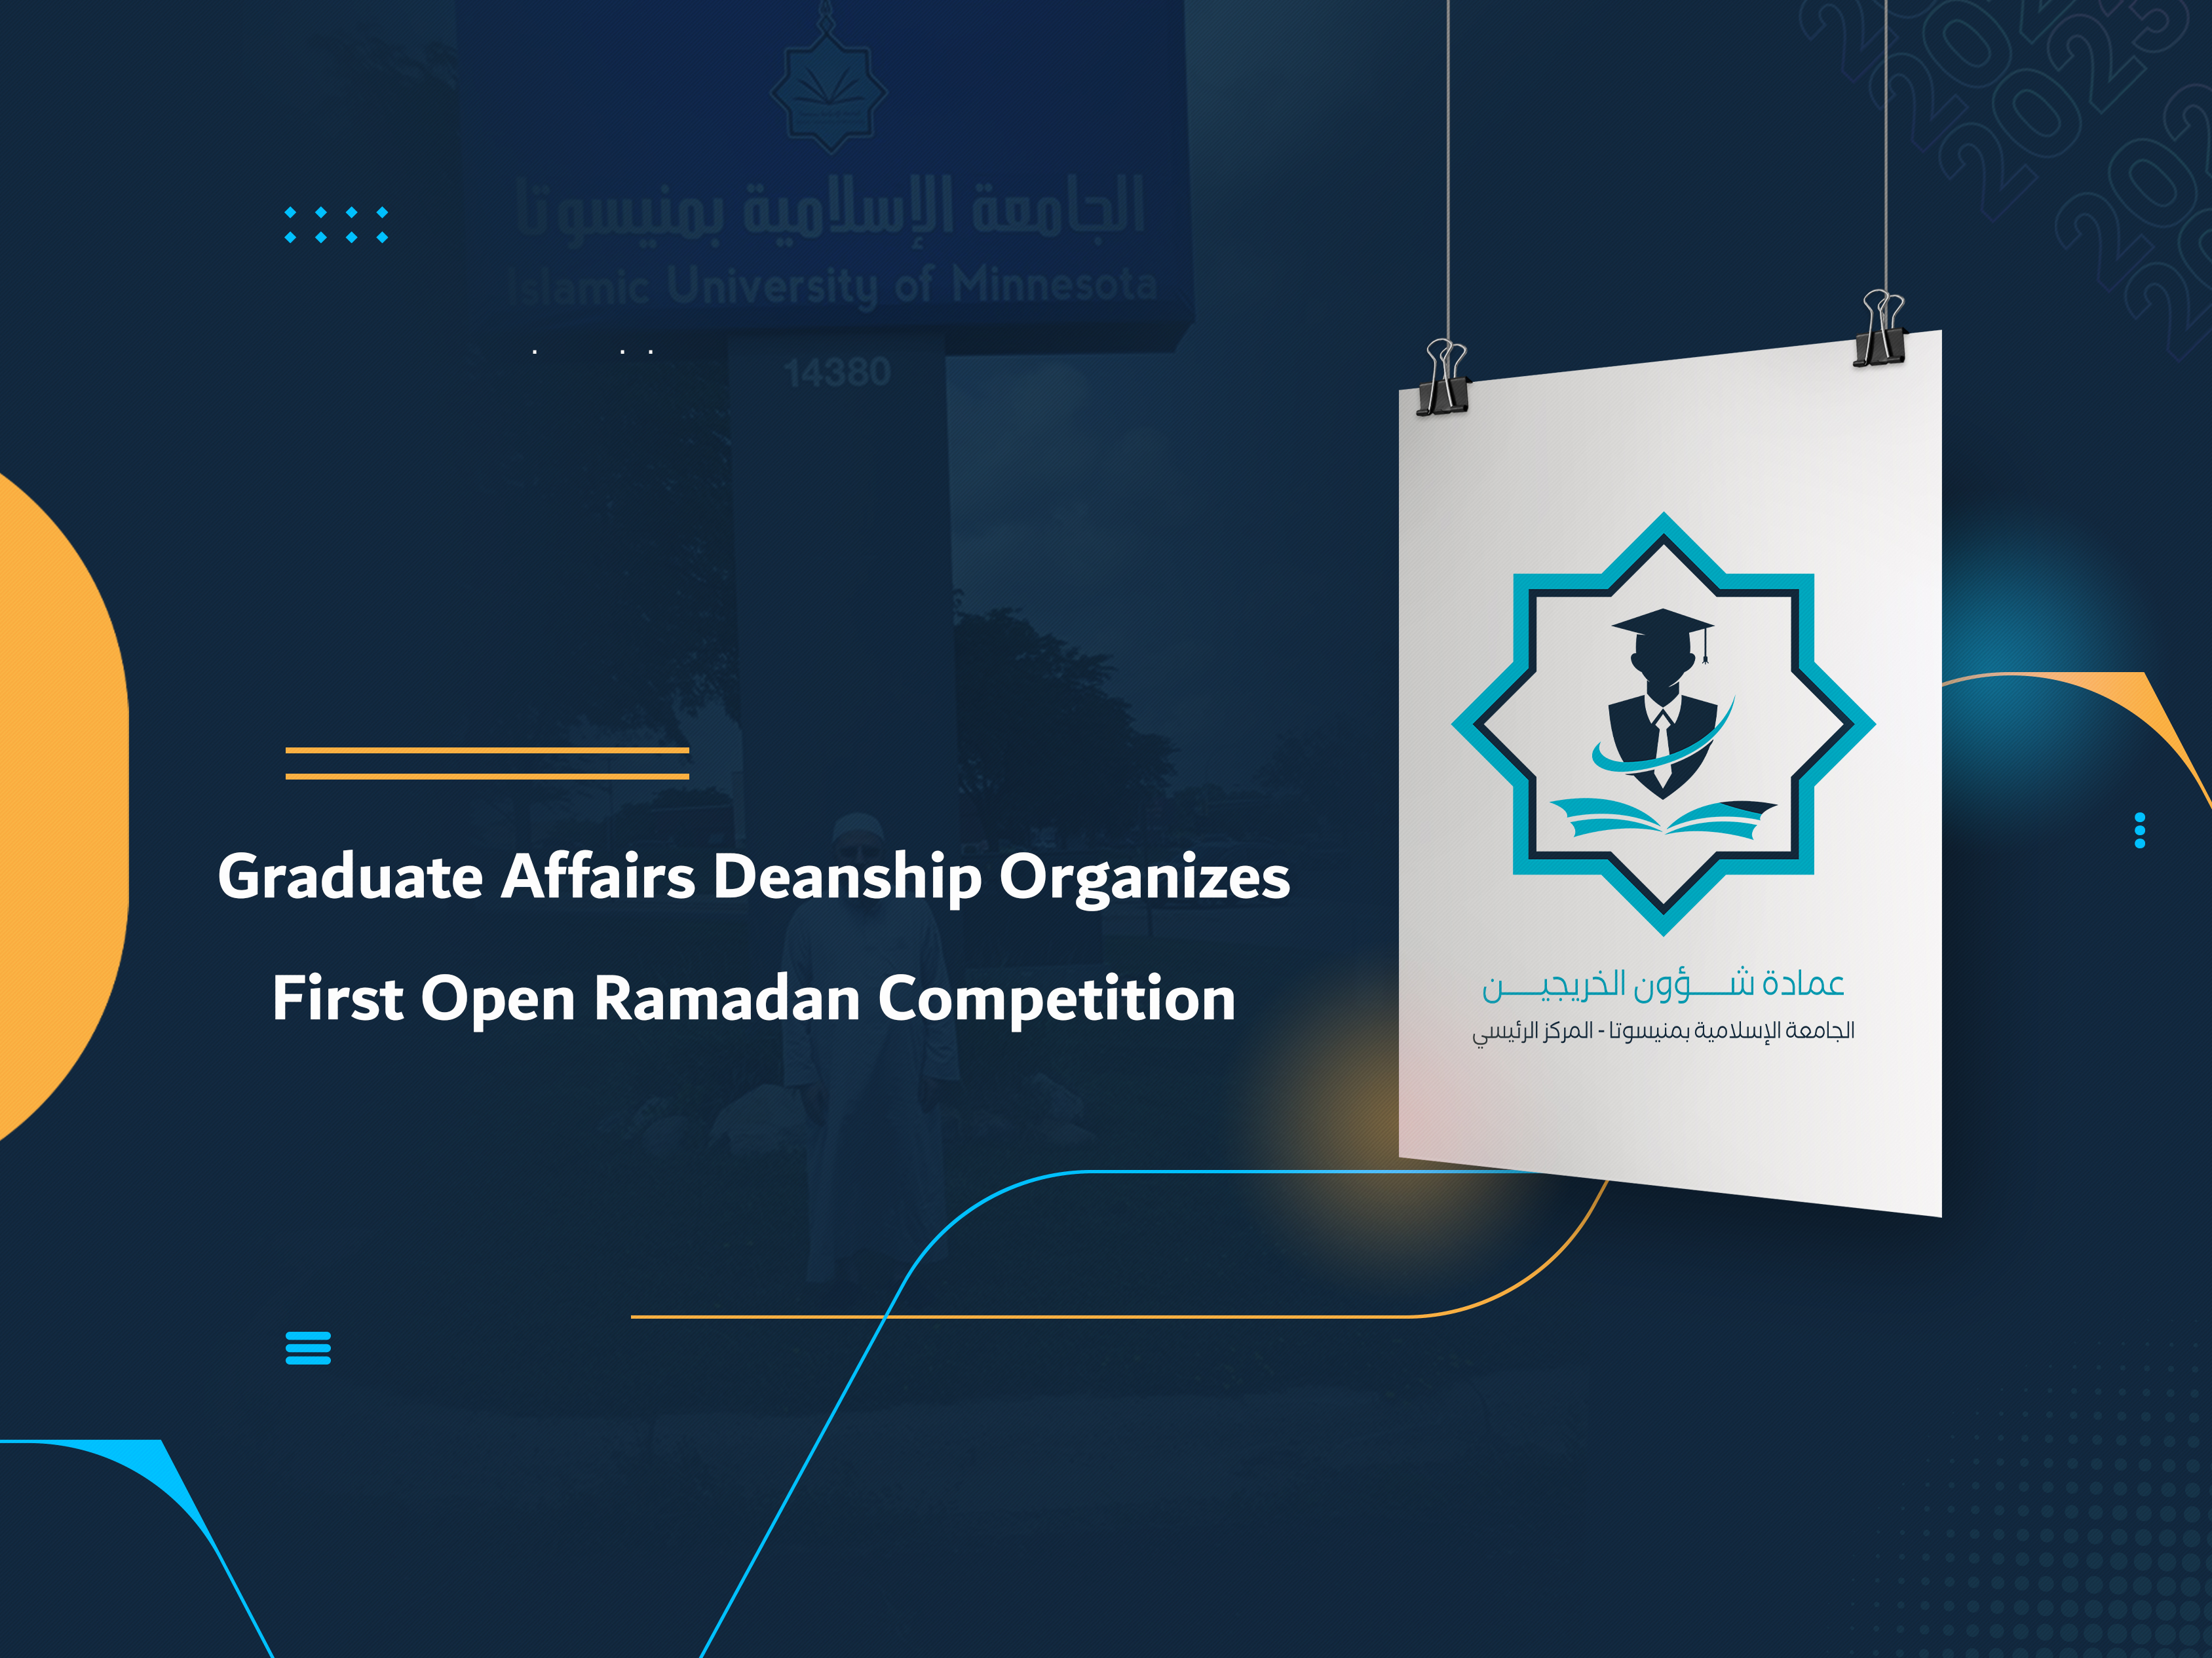 Graduate Affairs Deanship Organizes First Open Ramadan Competition